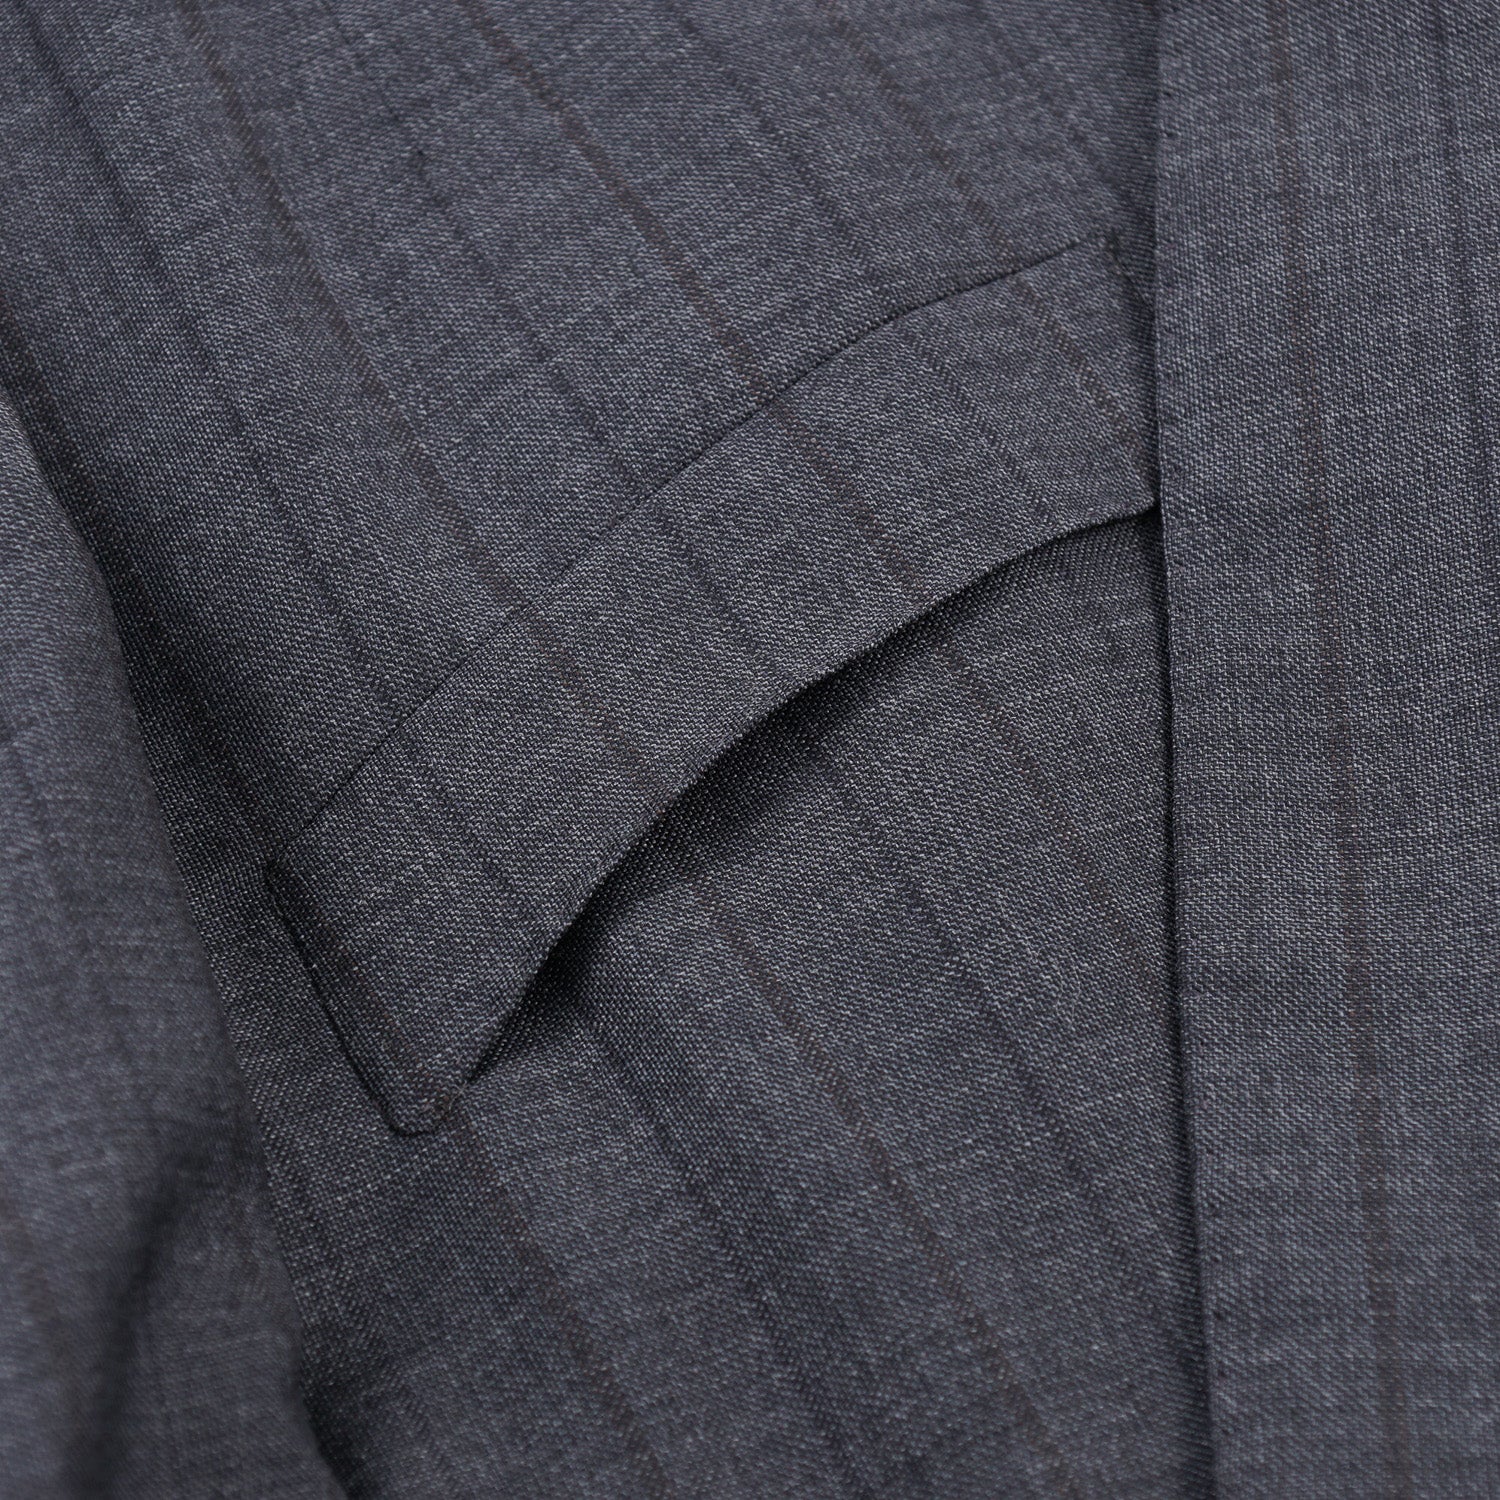 Isaia Slim-Fit Super 140s Wool Suit - Top Shelf Apparel